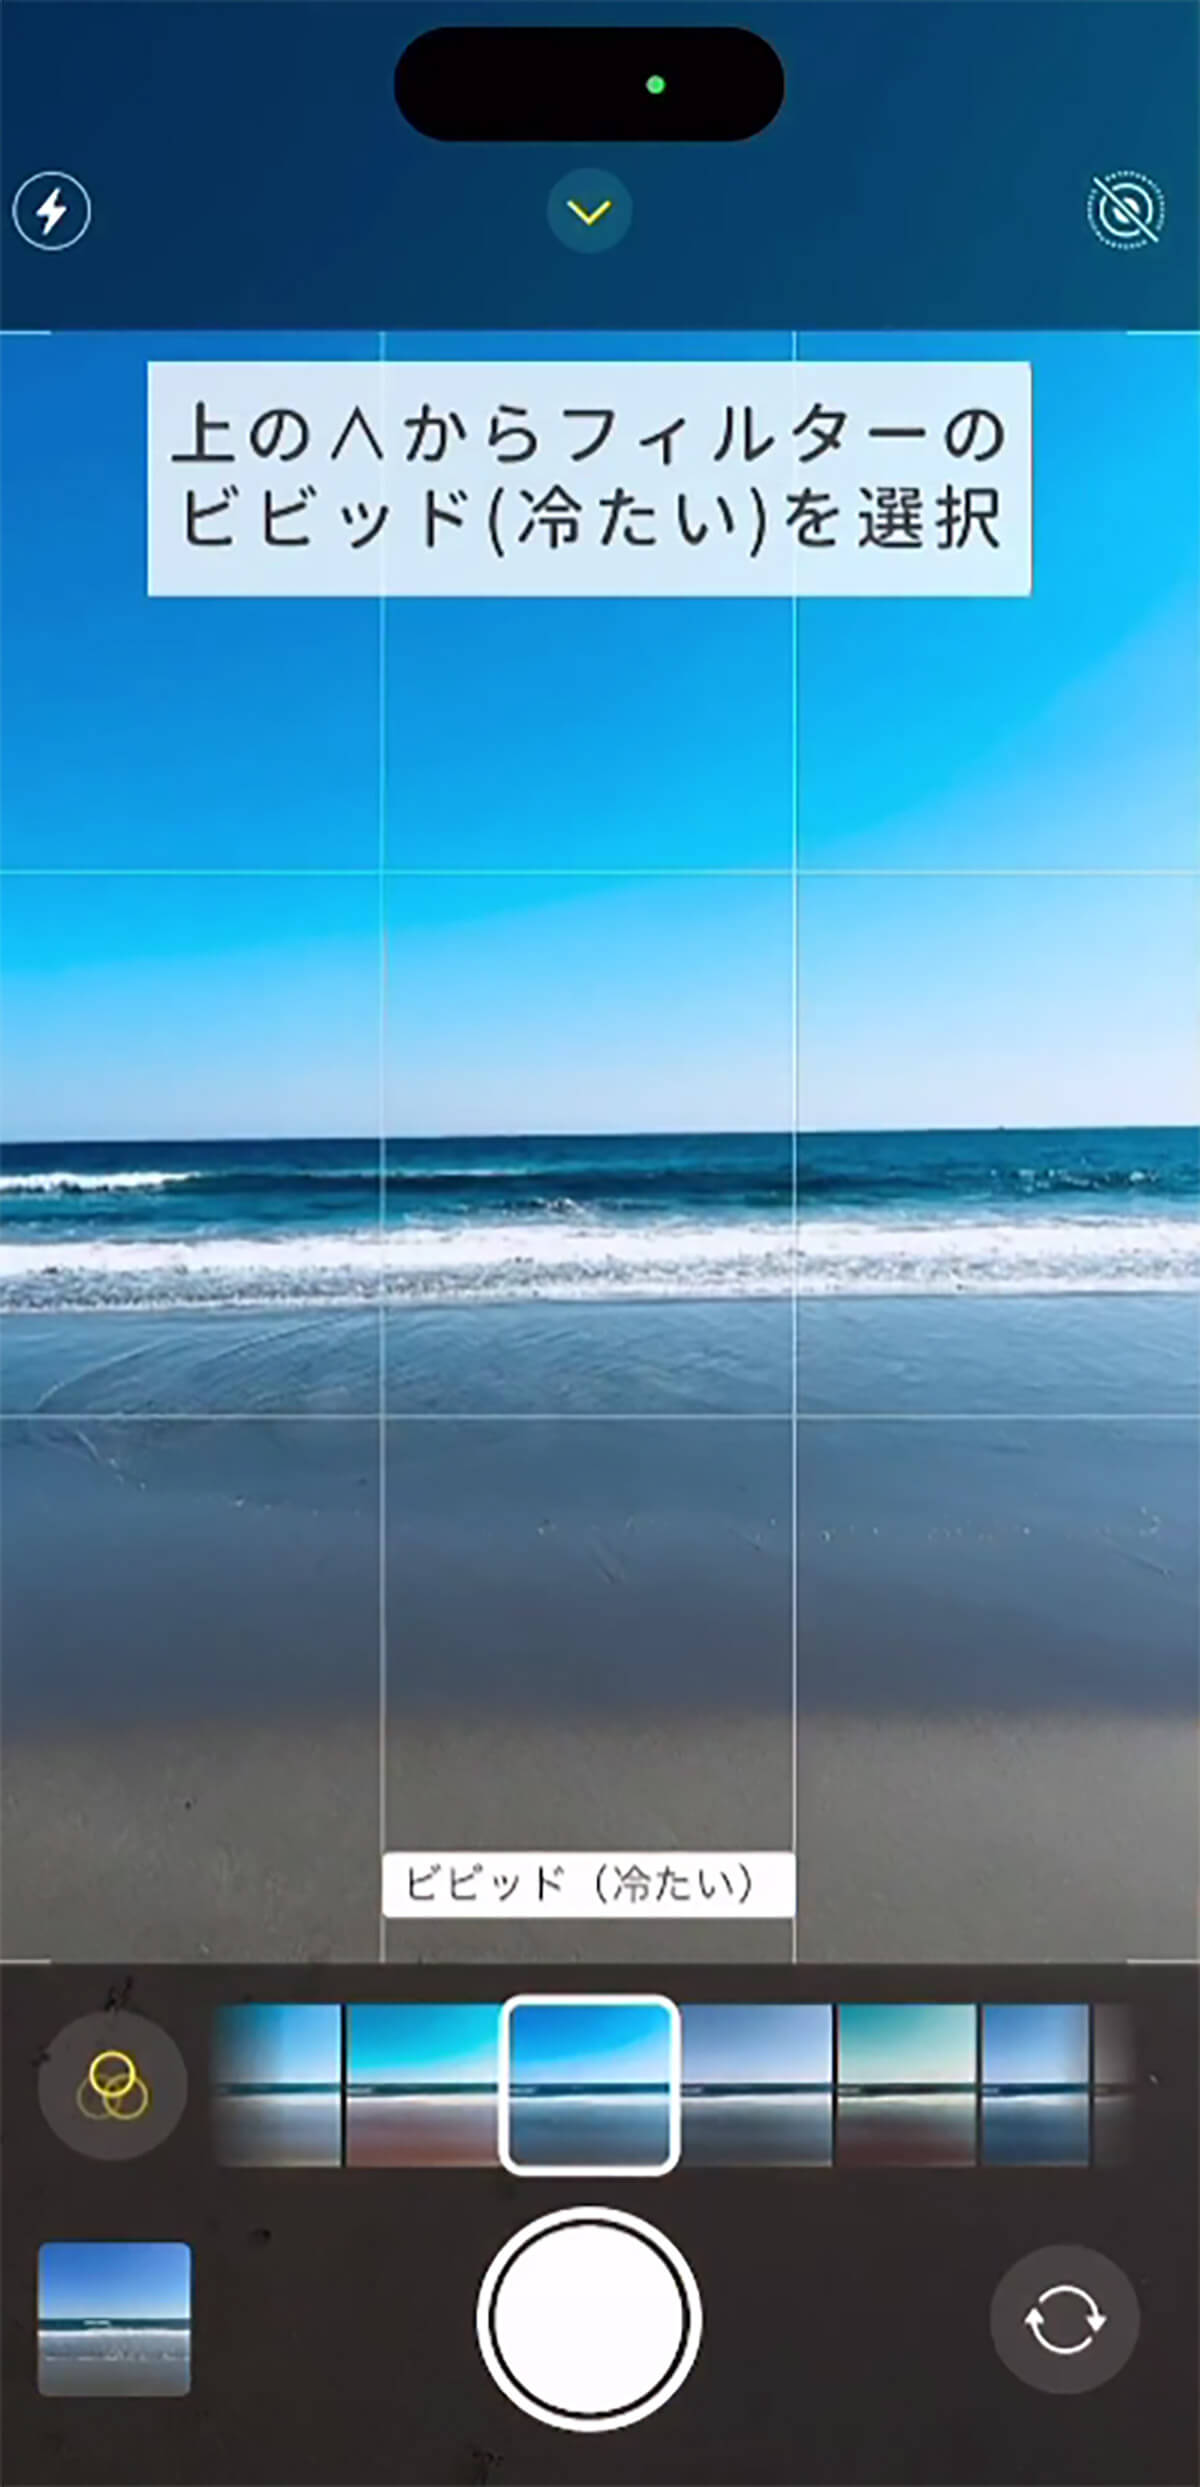 iPhoneで海の写真をダイナミックに撮影する方法1